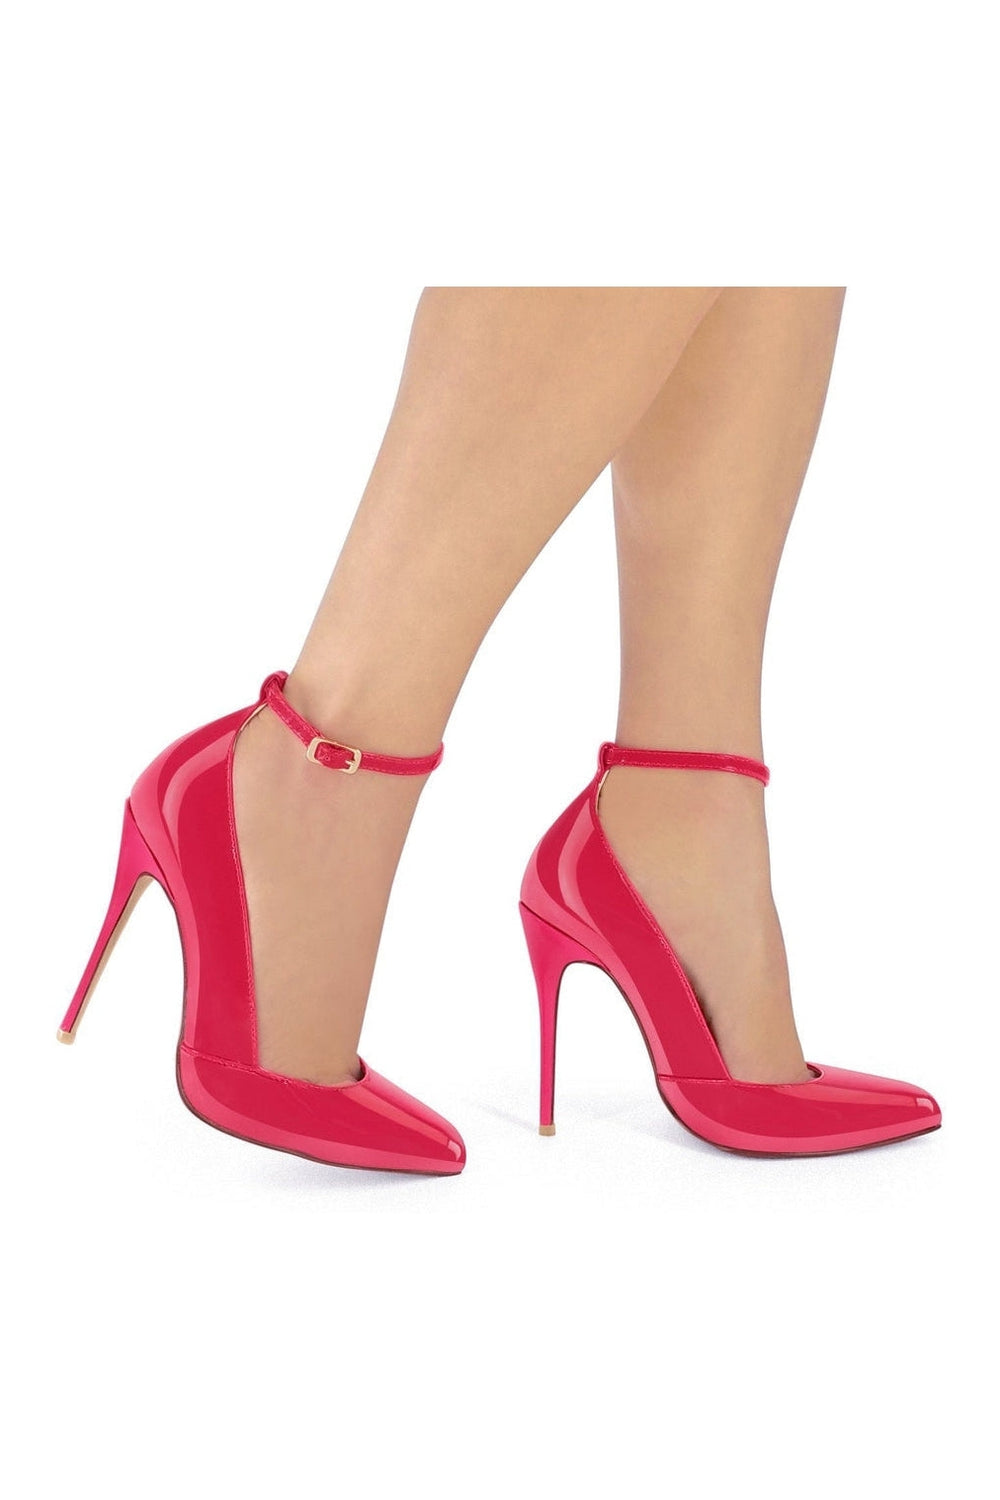 Sexy A-Line Ankle Strap Stiletto Pump-Pumps- Stripper Shoes at SEXYSHOES.COM